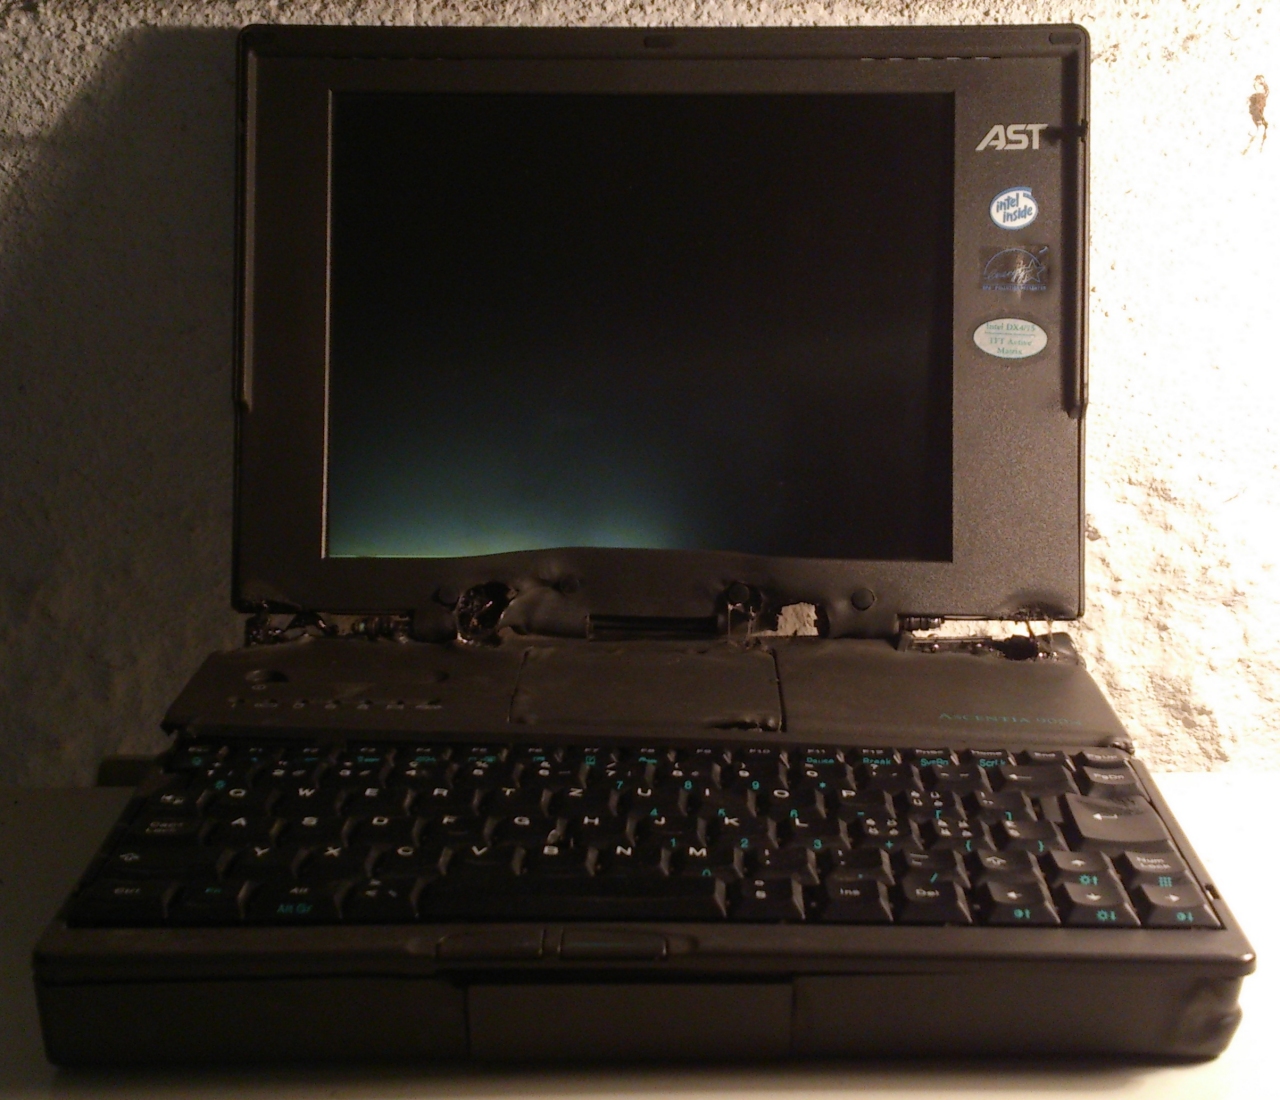 Nuked laptop, with apologies to Kenny Irwin